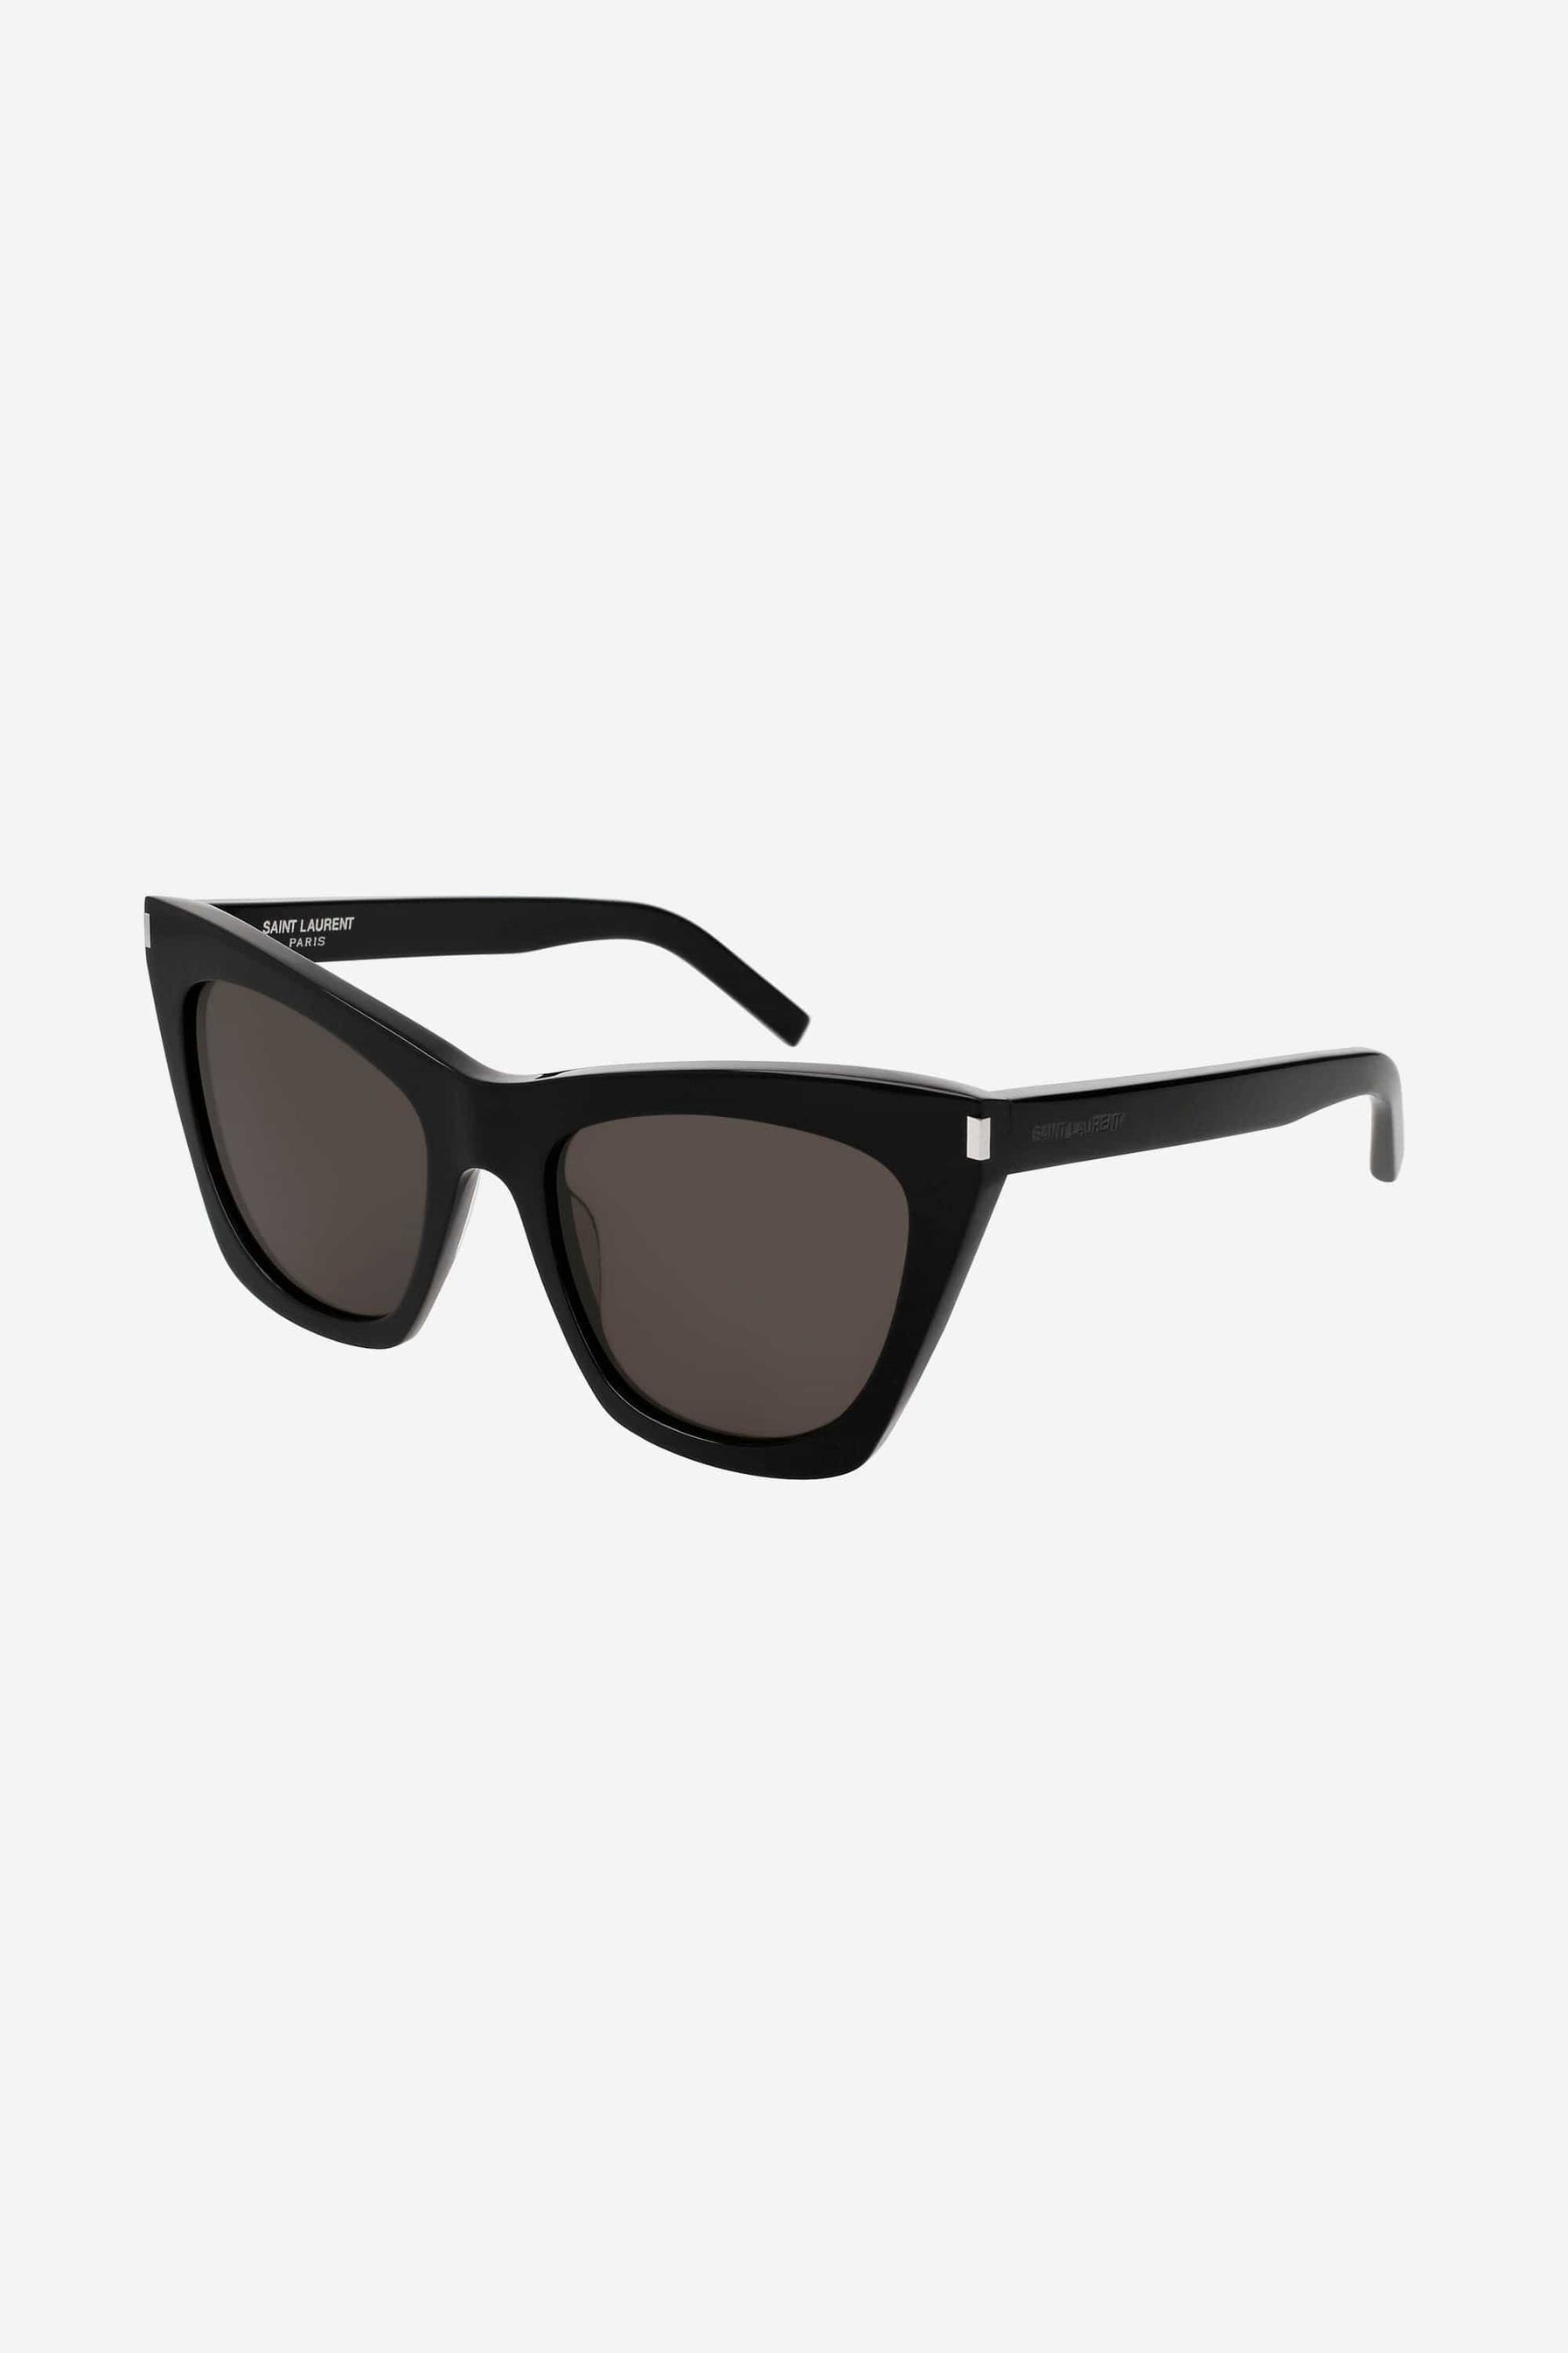 Saint Laurent iconic KATE cat-eye black sunglasses - Eyewear Club